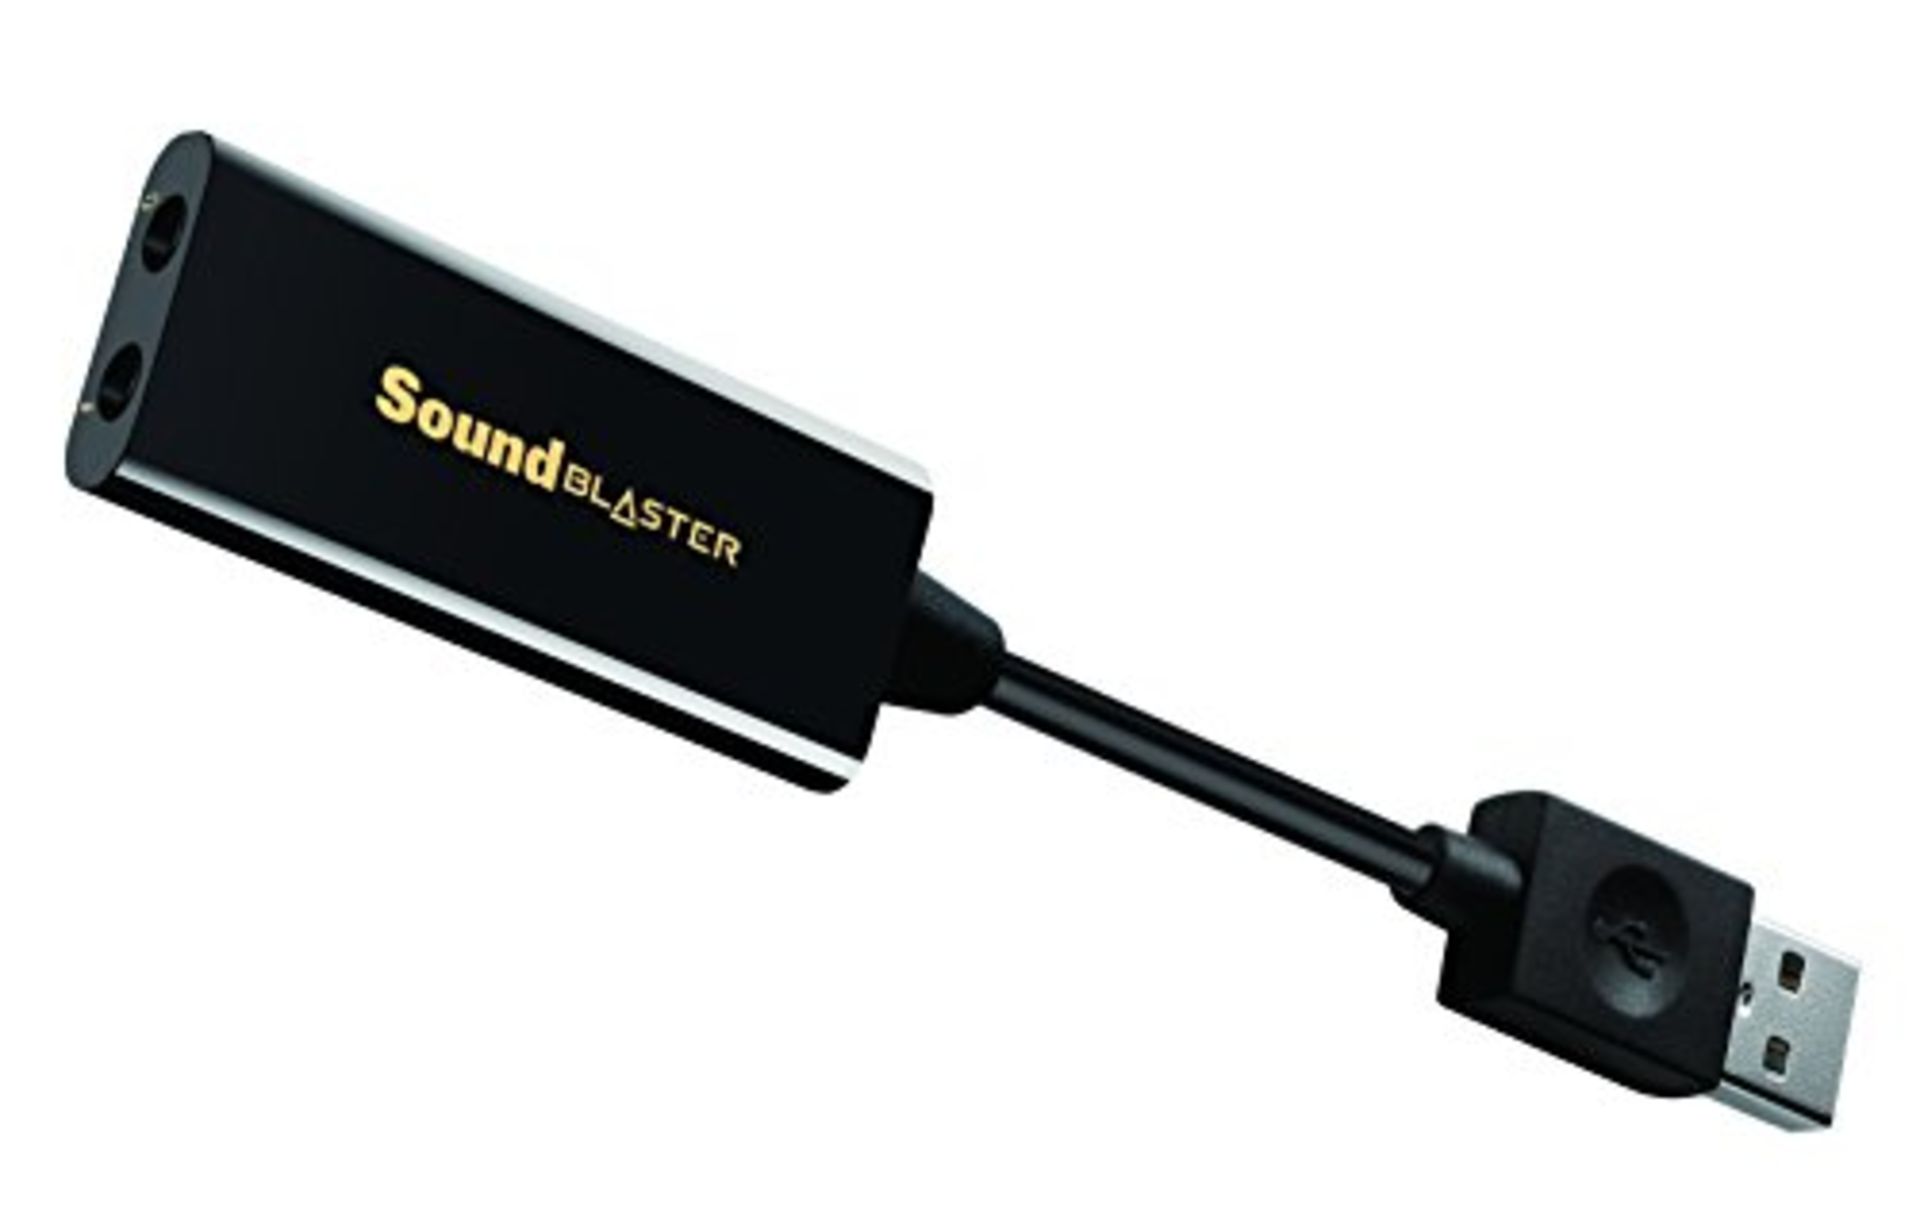 [NEW] Creative Sound Blaster Play!3 - USB-DAC amplifier and external sound card, black